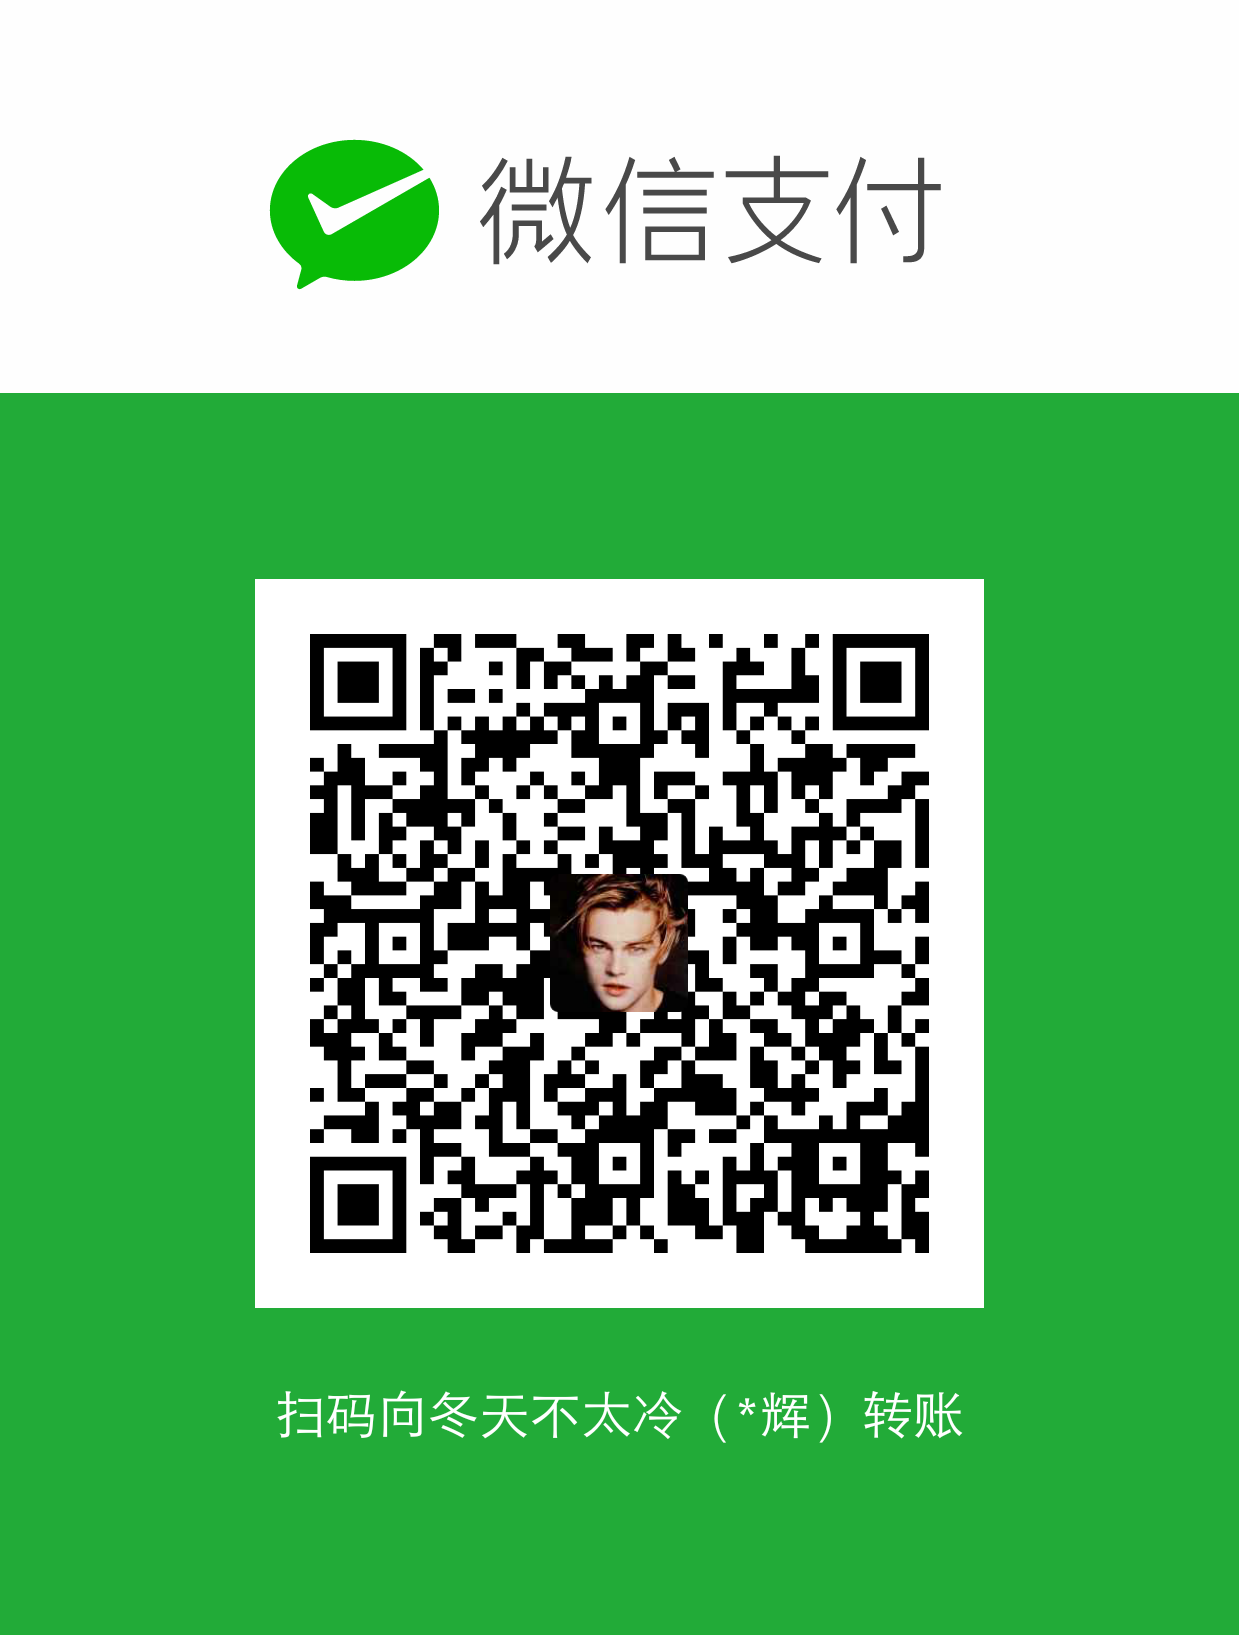 JohnXiang WeChat Pay